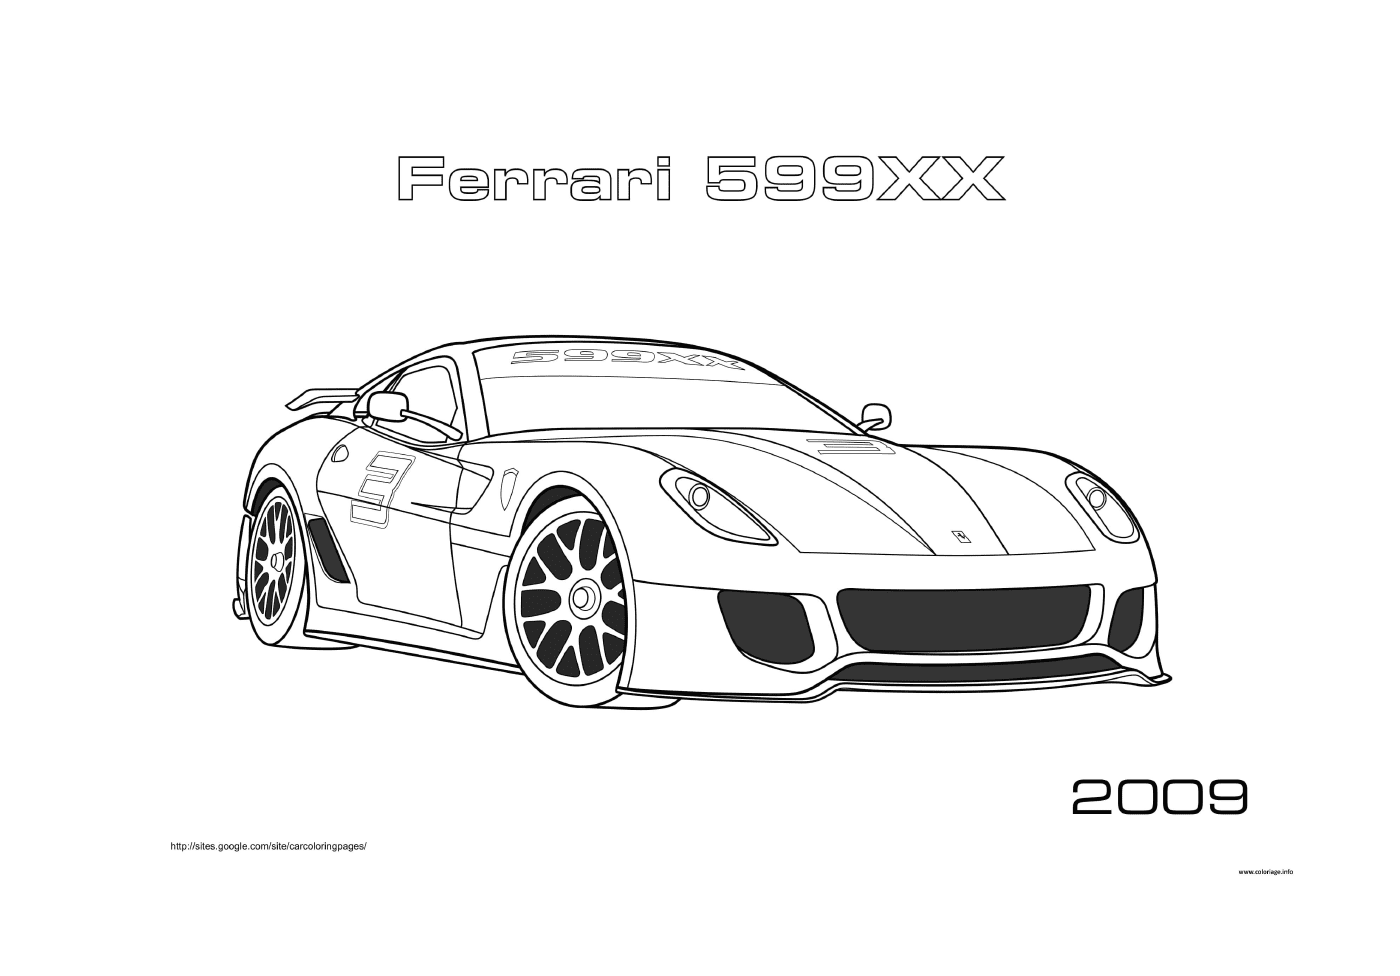  Гоночная машина Ferrari 599XX 